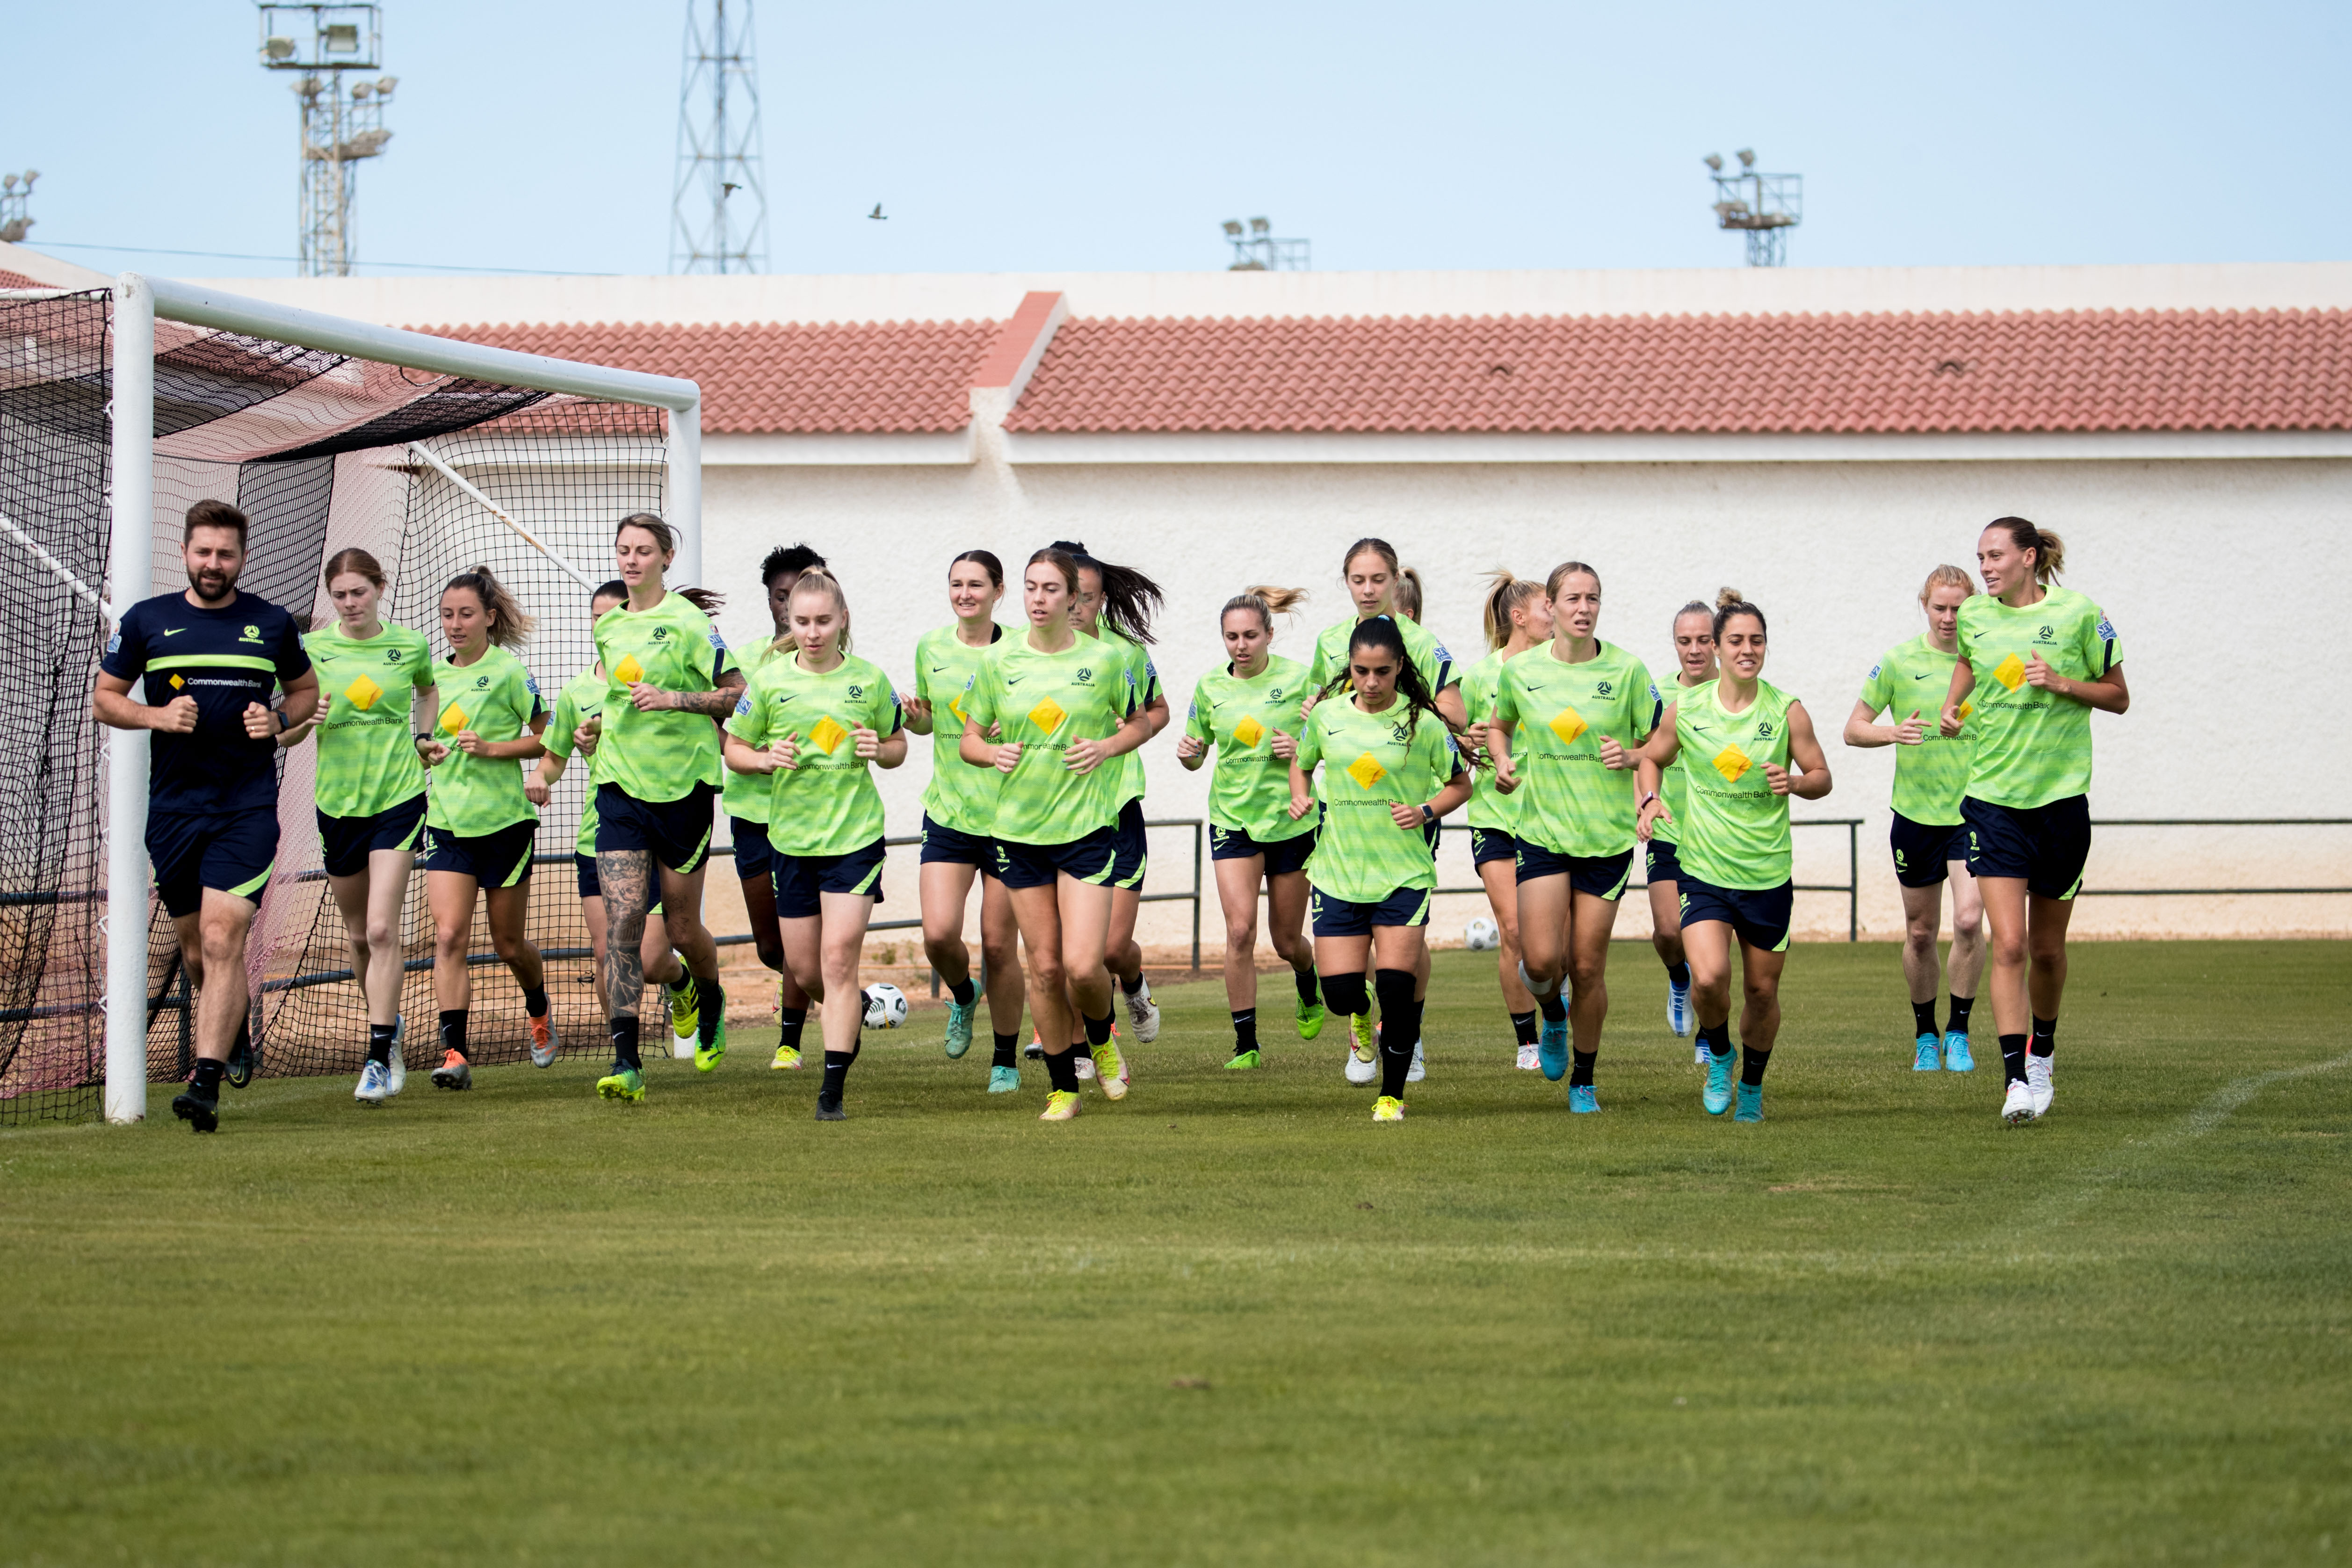 The CommBank Matildas training in Huelva, Spain. (Photo: Ann Odong / Football Australia)